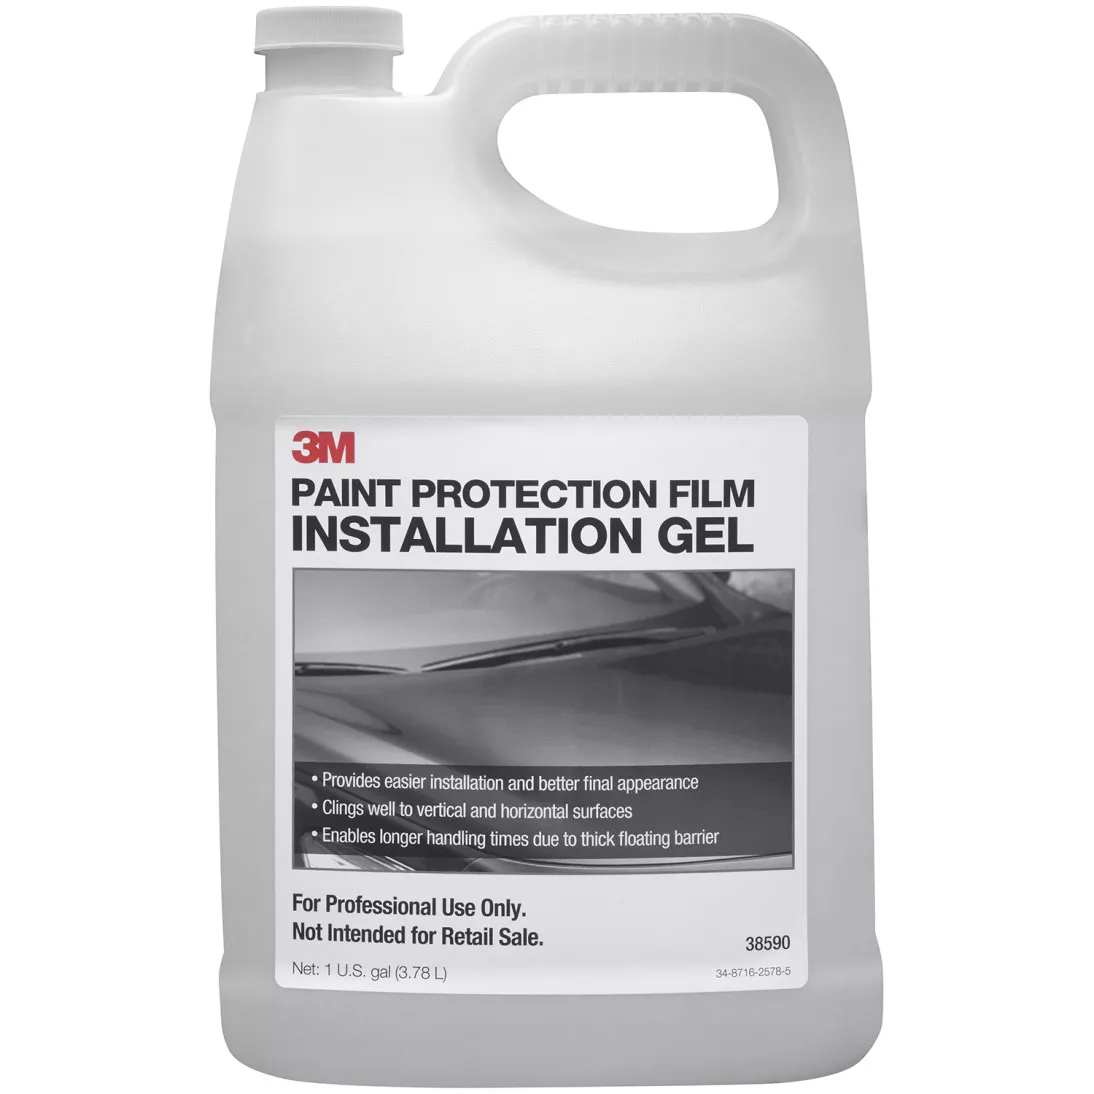 3M™ Paint Protection Film Installation Gel, PN38590, 1 gallon, 4 per
case